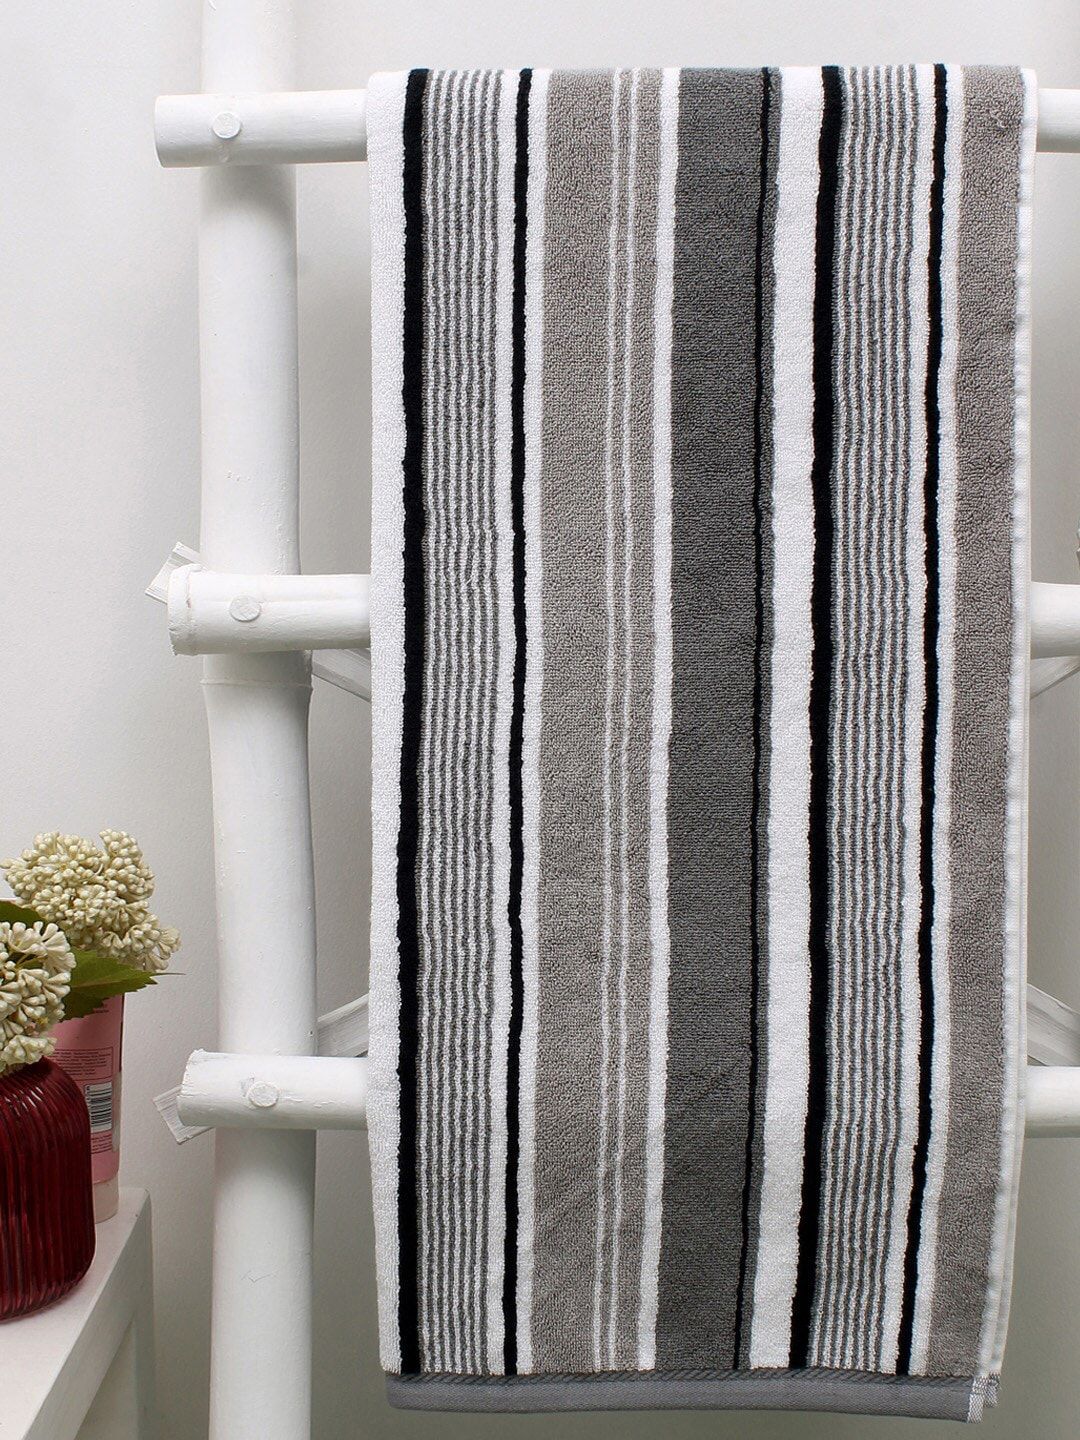 AVI Living Unisex Grey & Black Striped 600 GSM Cotton Bath Towel Price in India